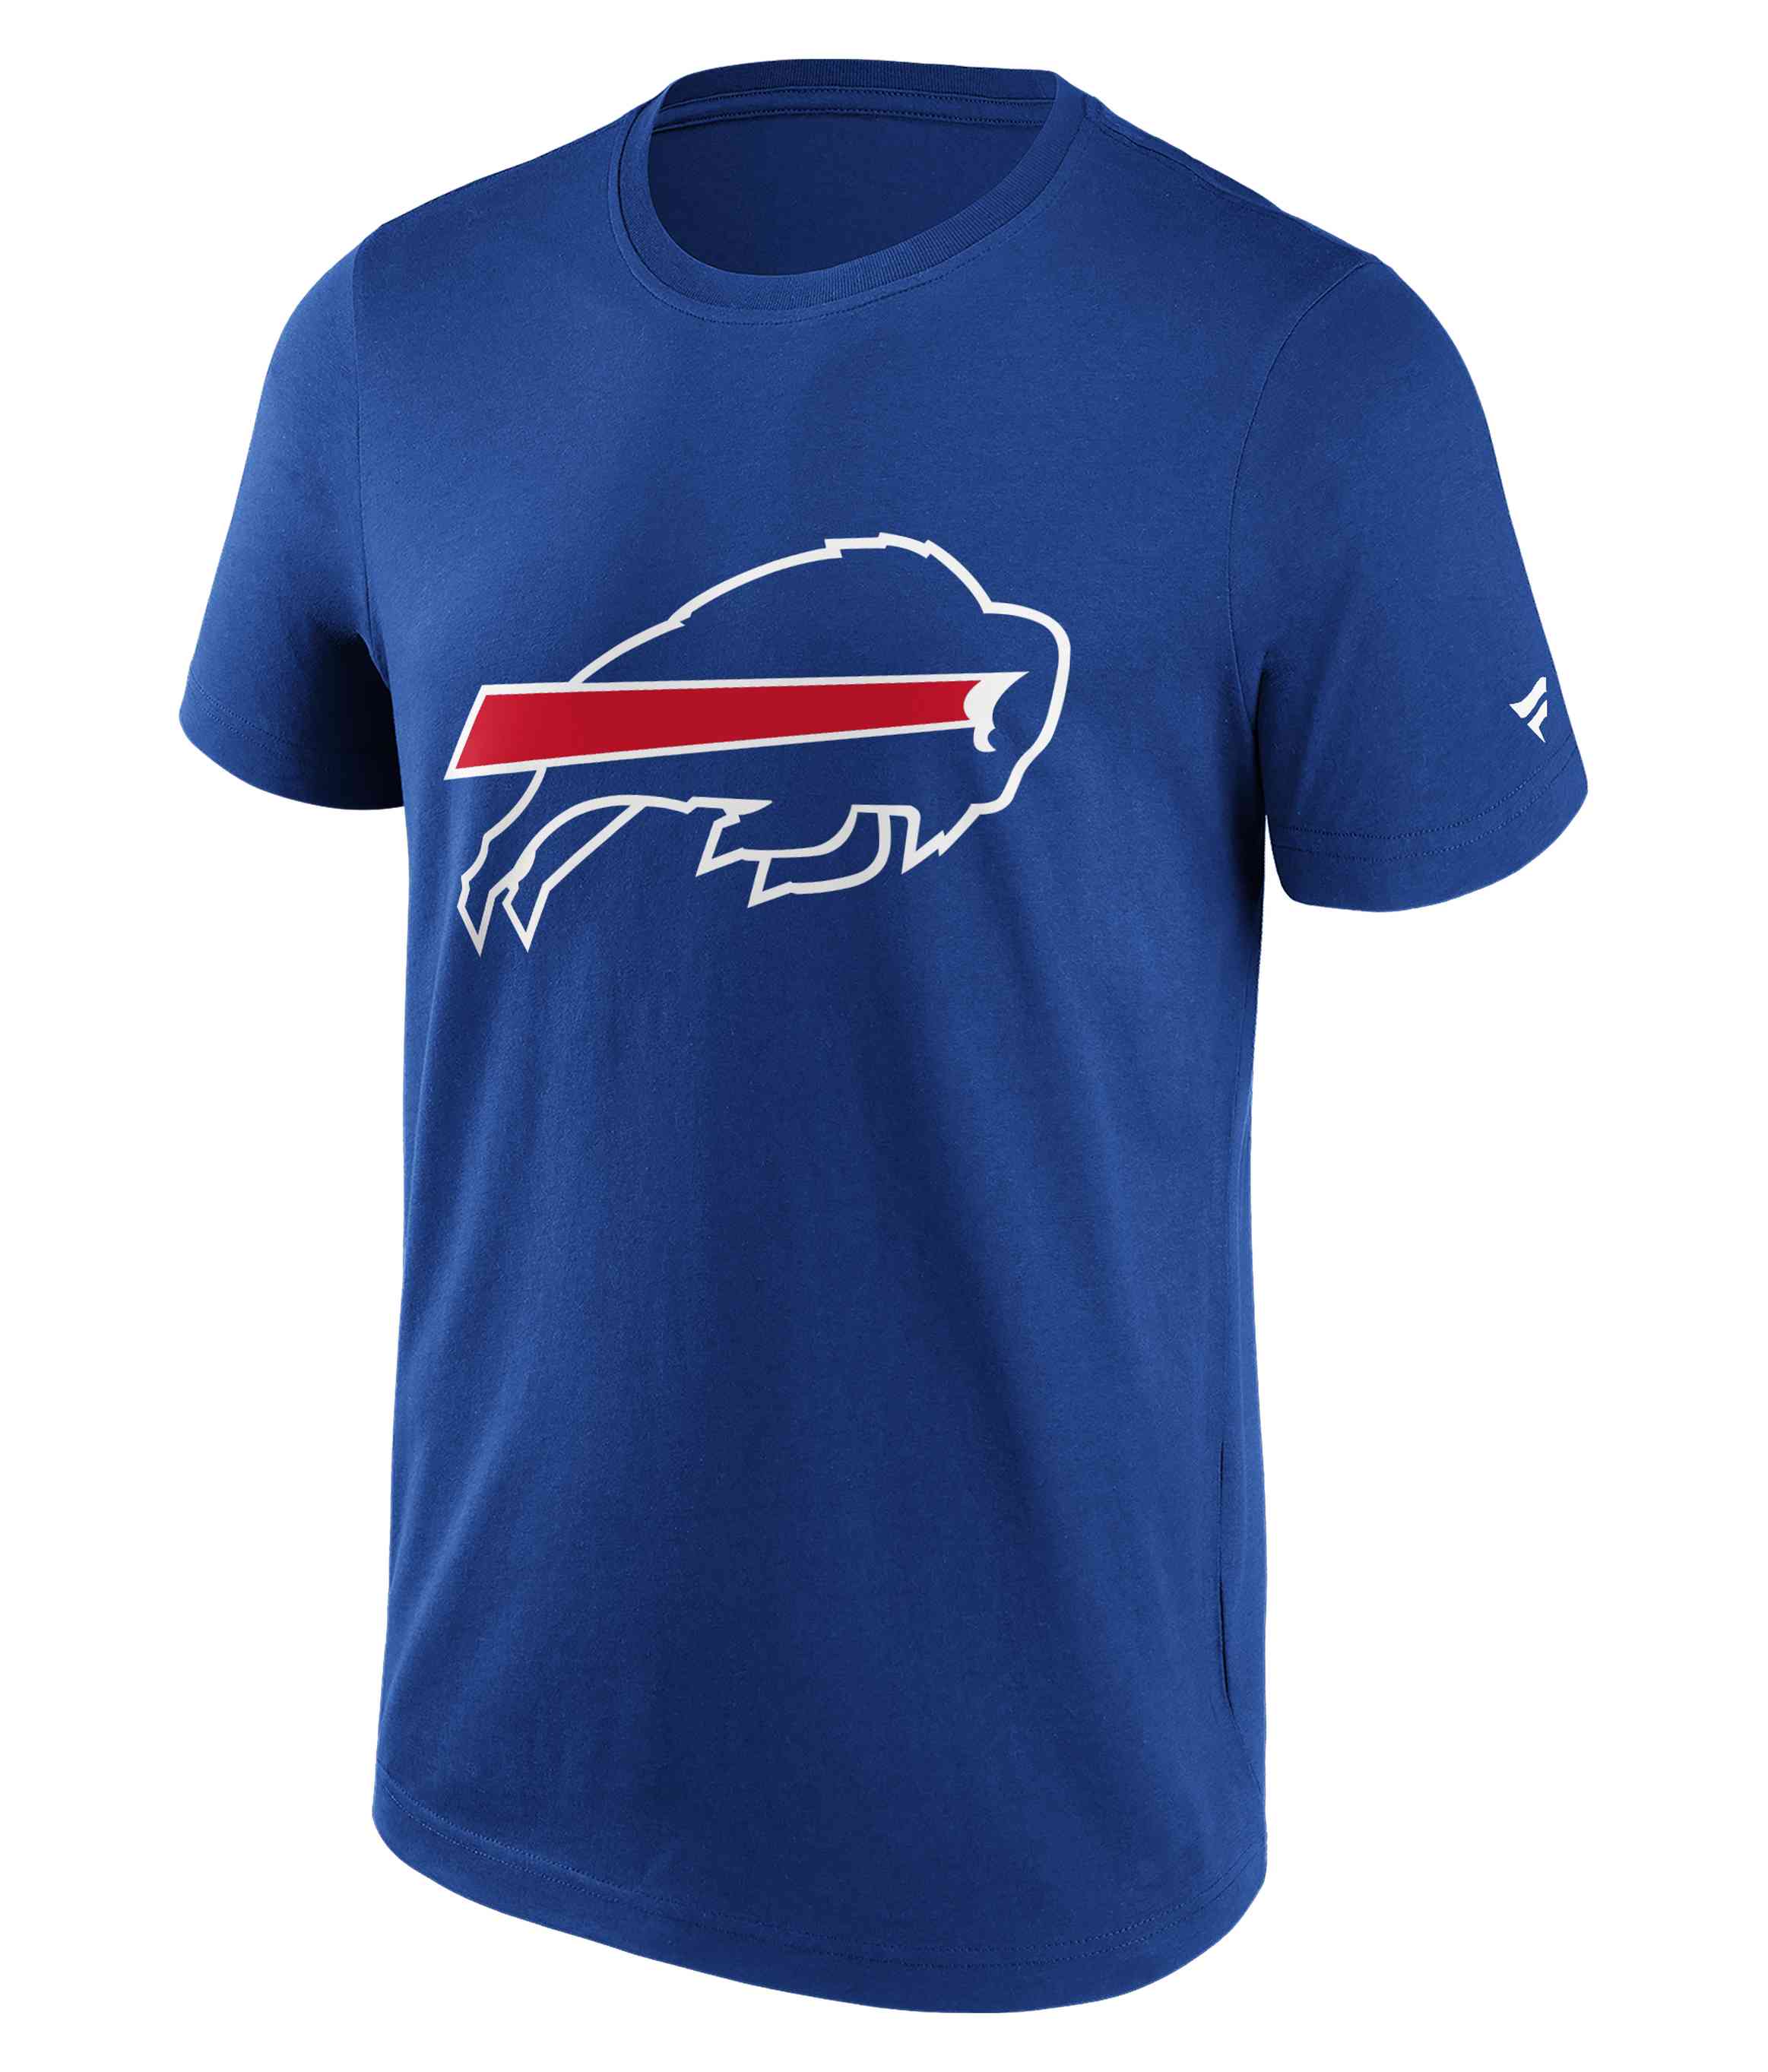 Fanatics - NFL Buffalo Bills Primary Logo Graphic T-Shirt